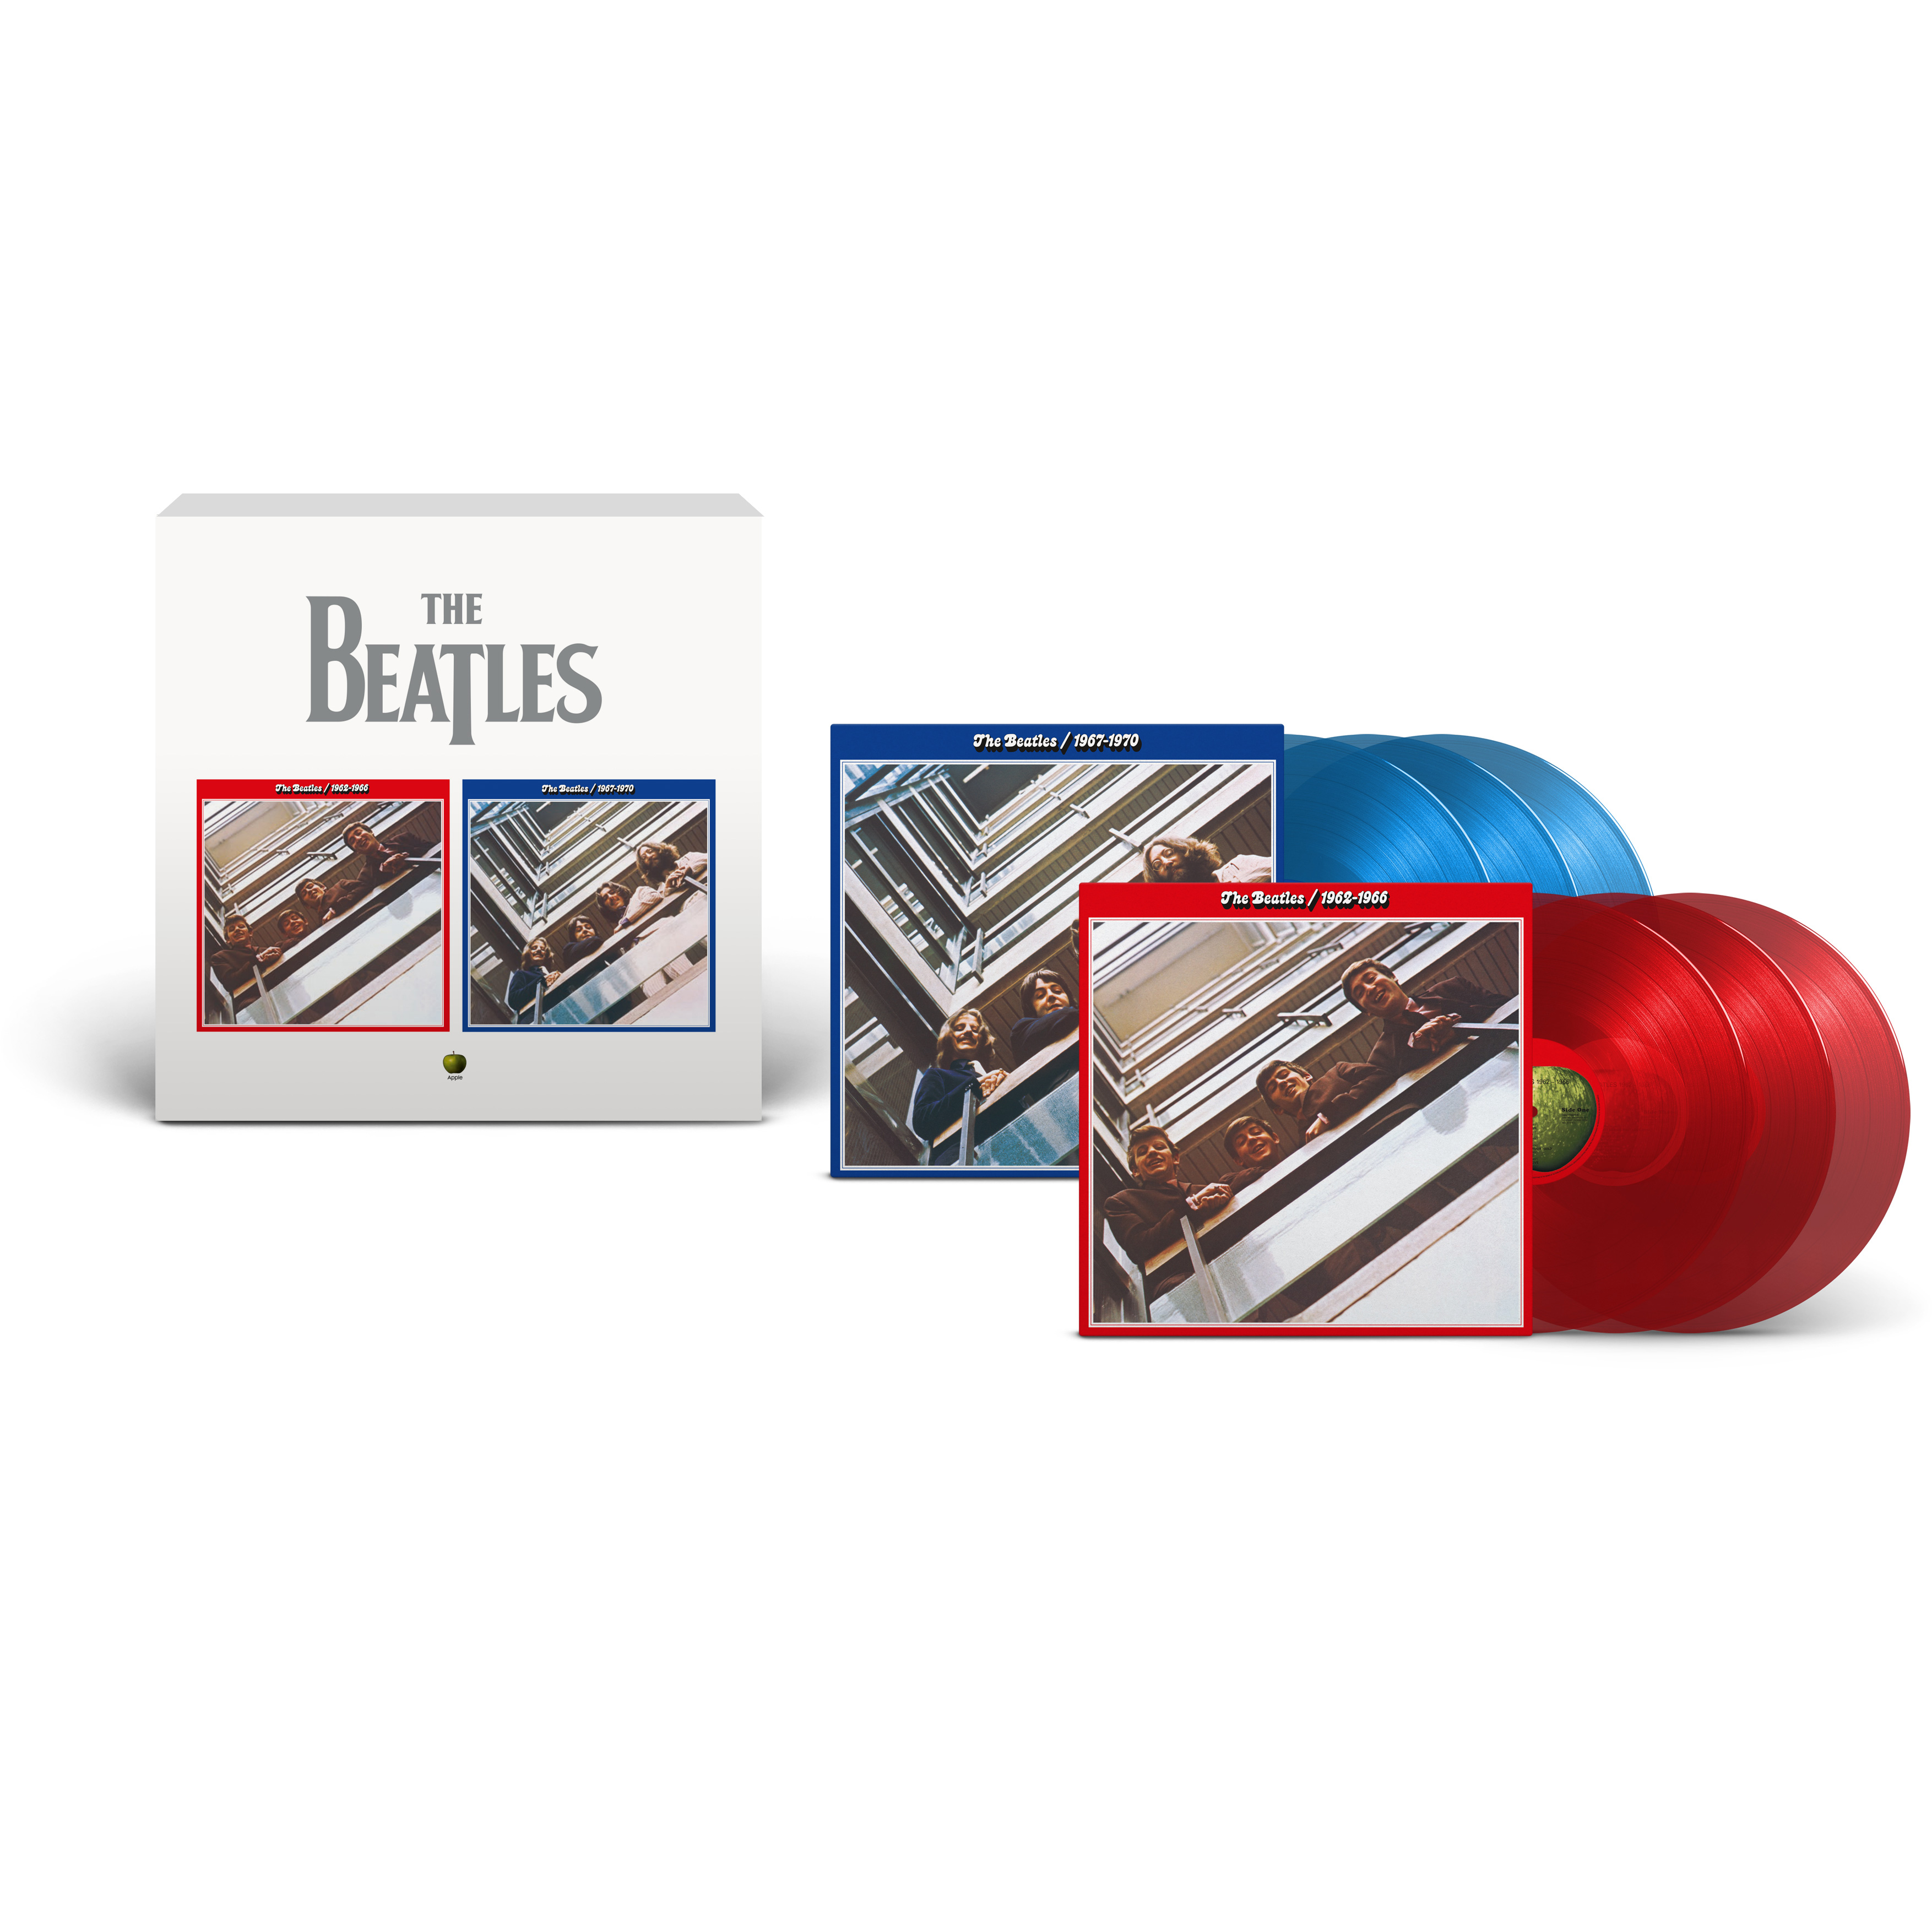 Red and Blue LP Vinyl Slipcase